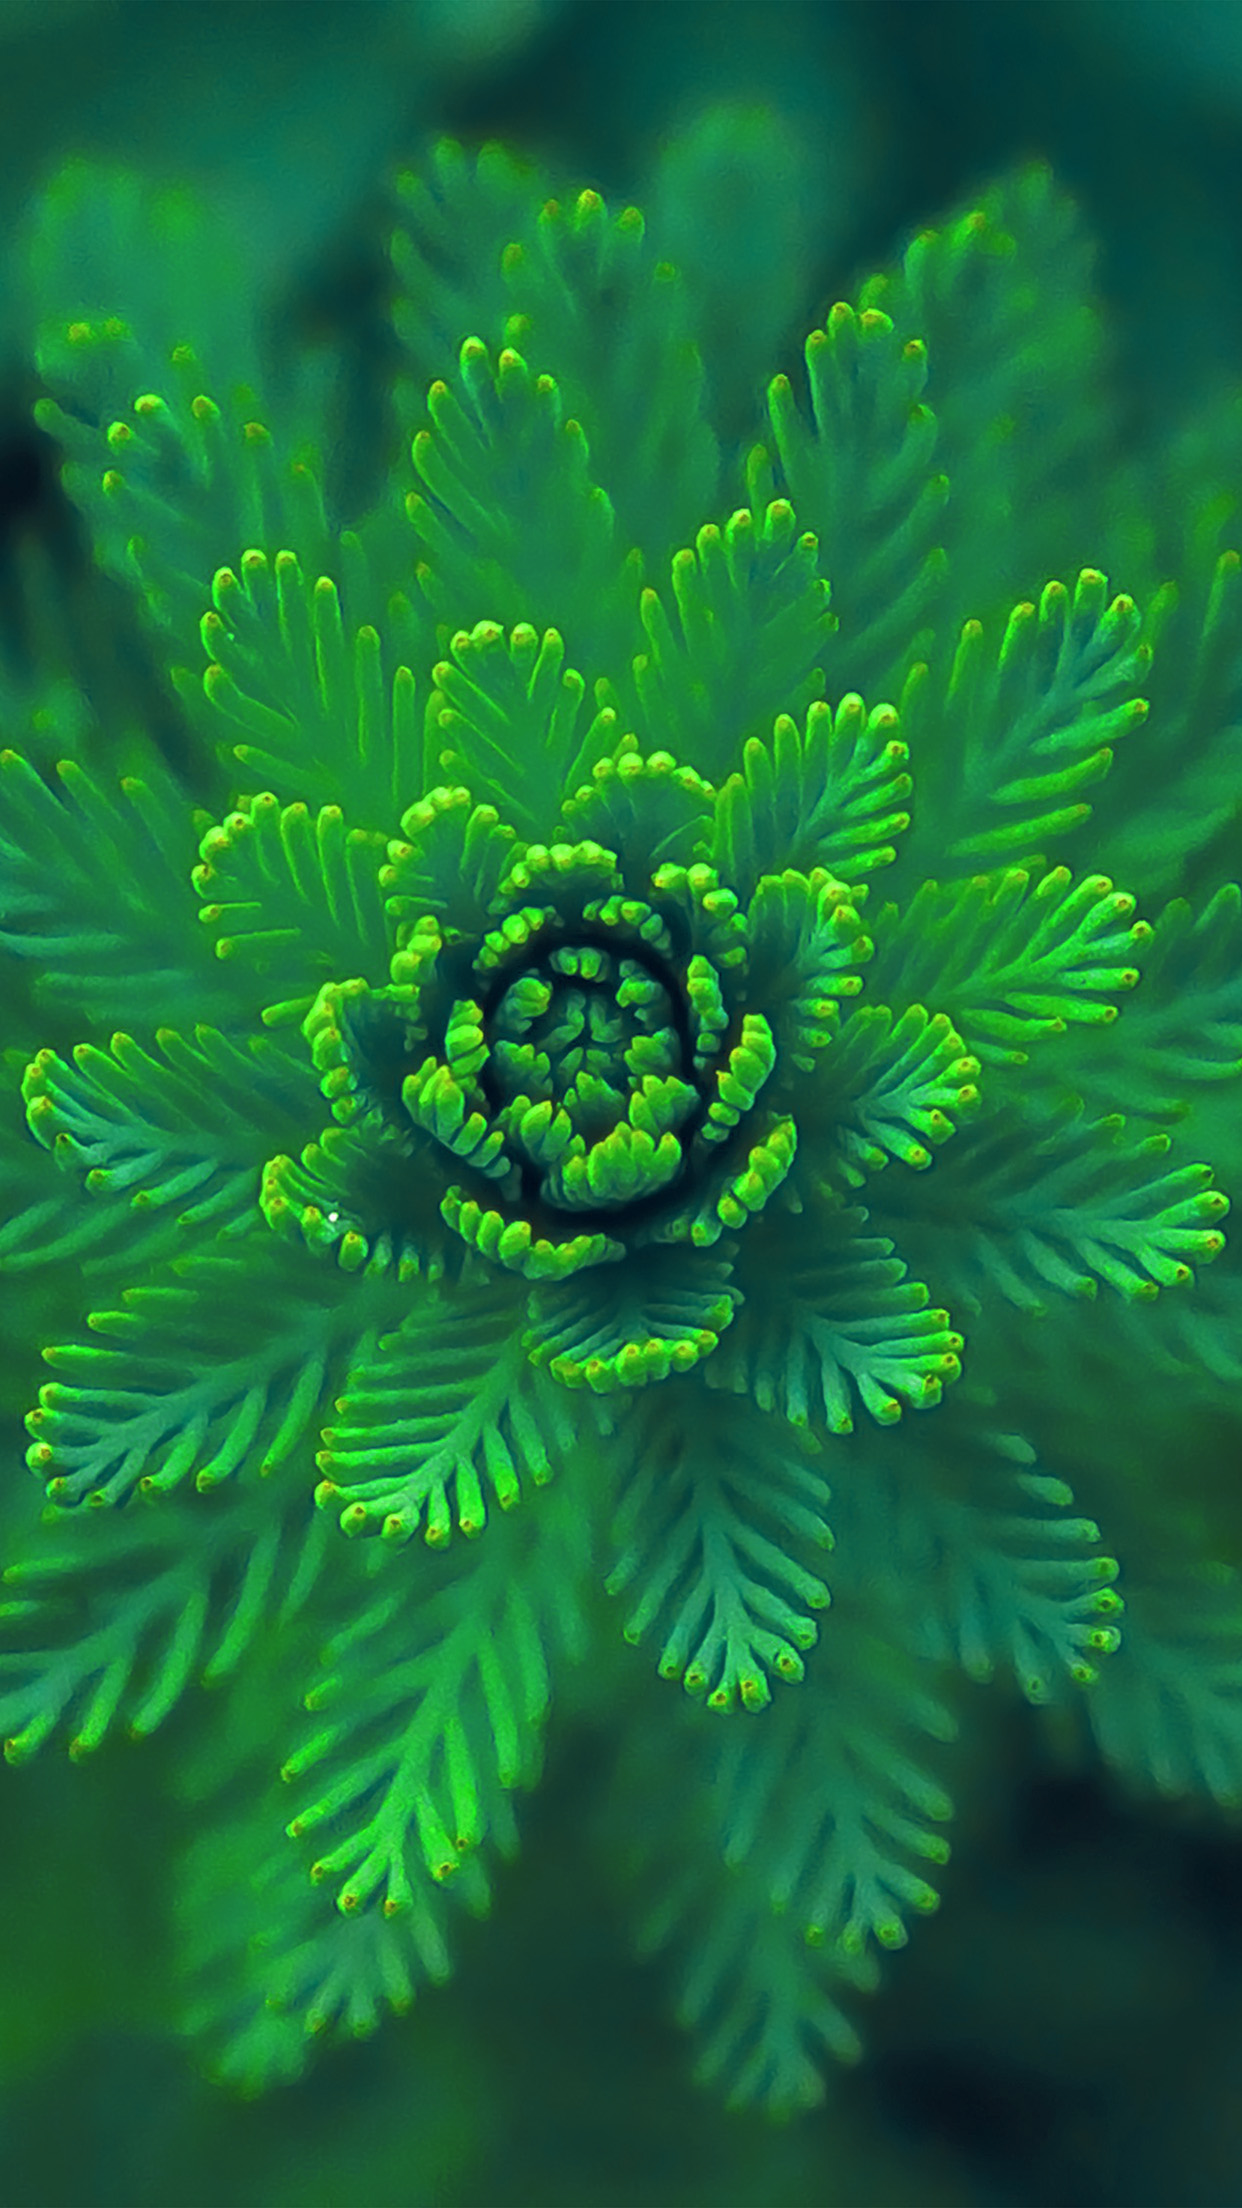 iPhone X wallpaper. flower green leaf nature blue